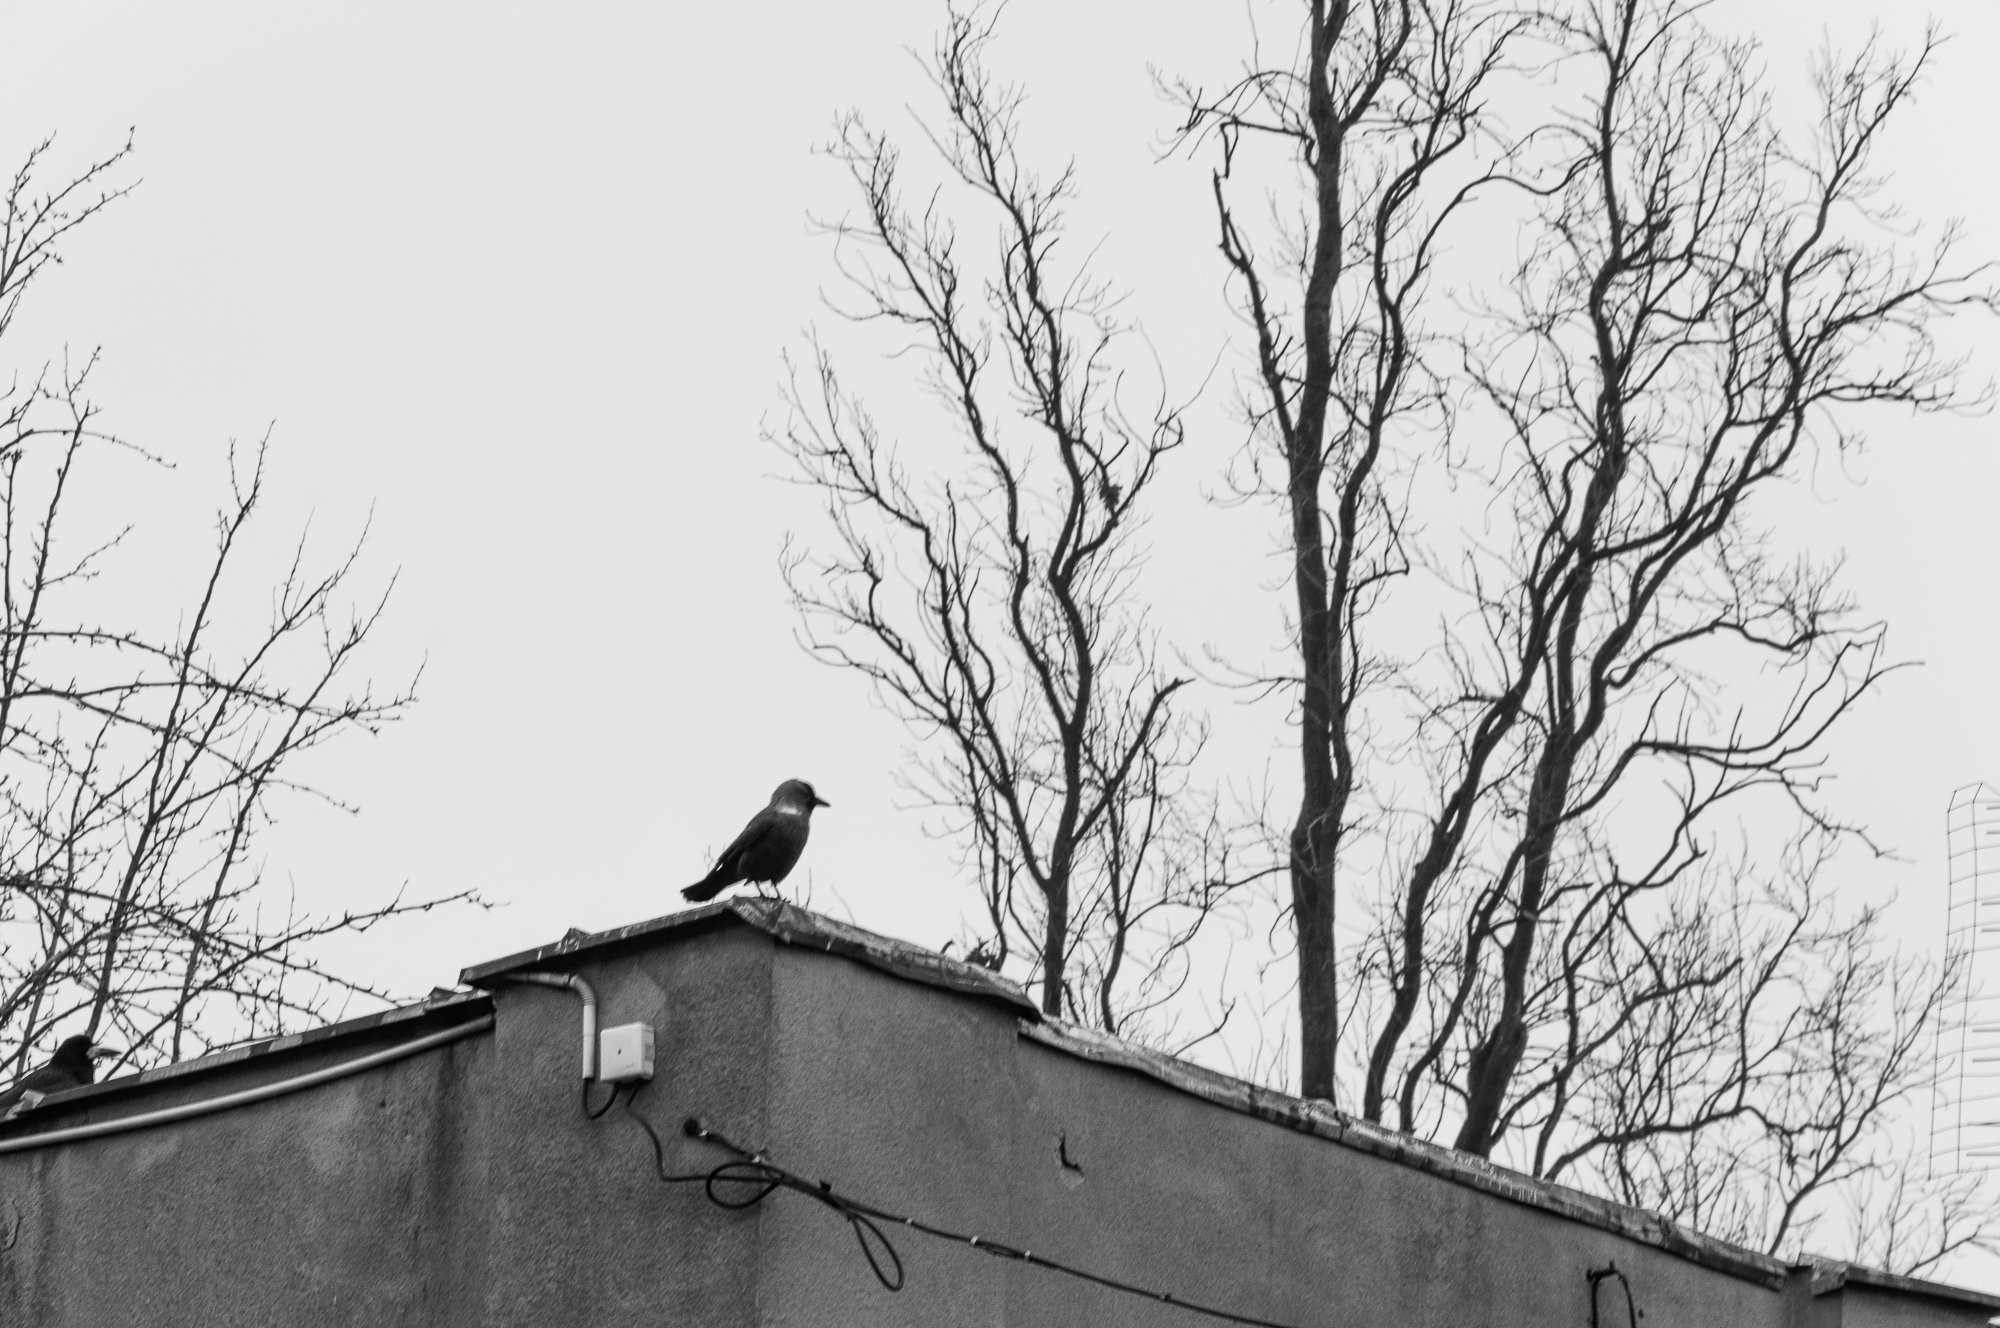 Adam Mazek Photography Warsaw (Warszawa) 2020. Post: "Forgetting." Minimalism. Trees. Bird.